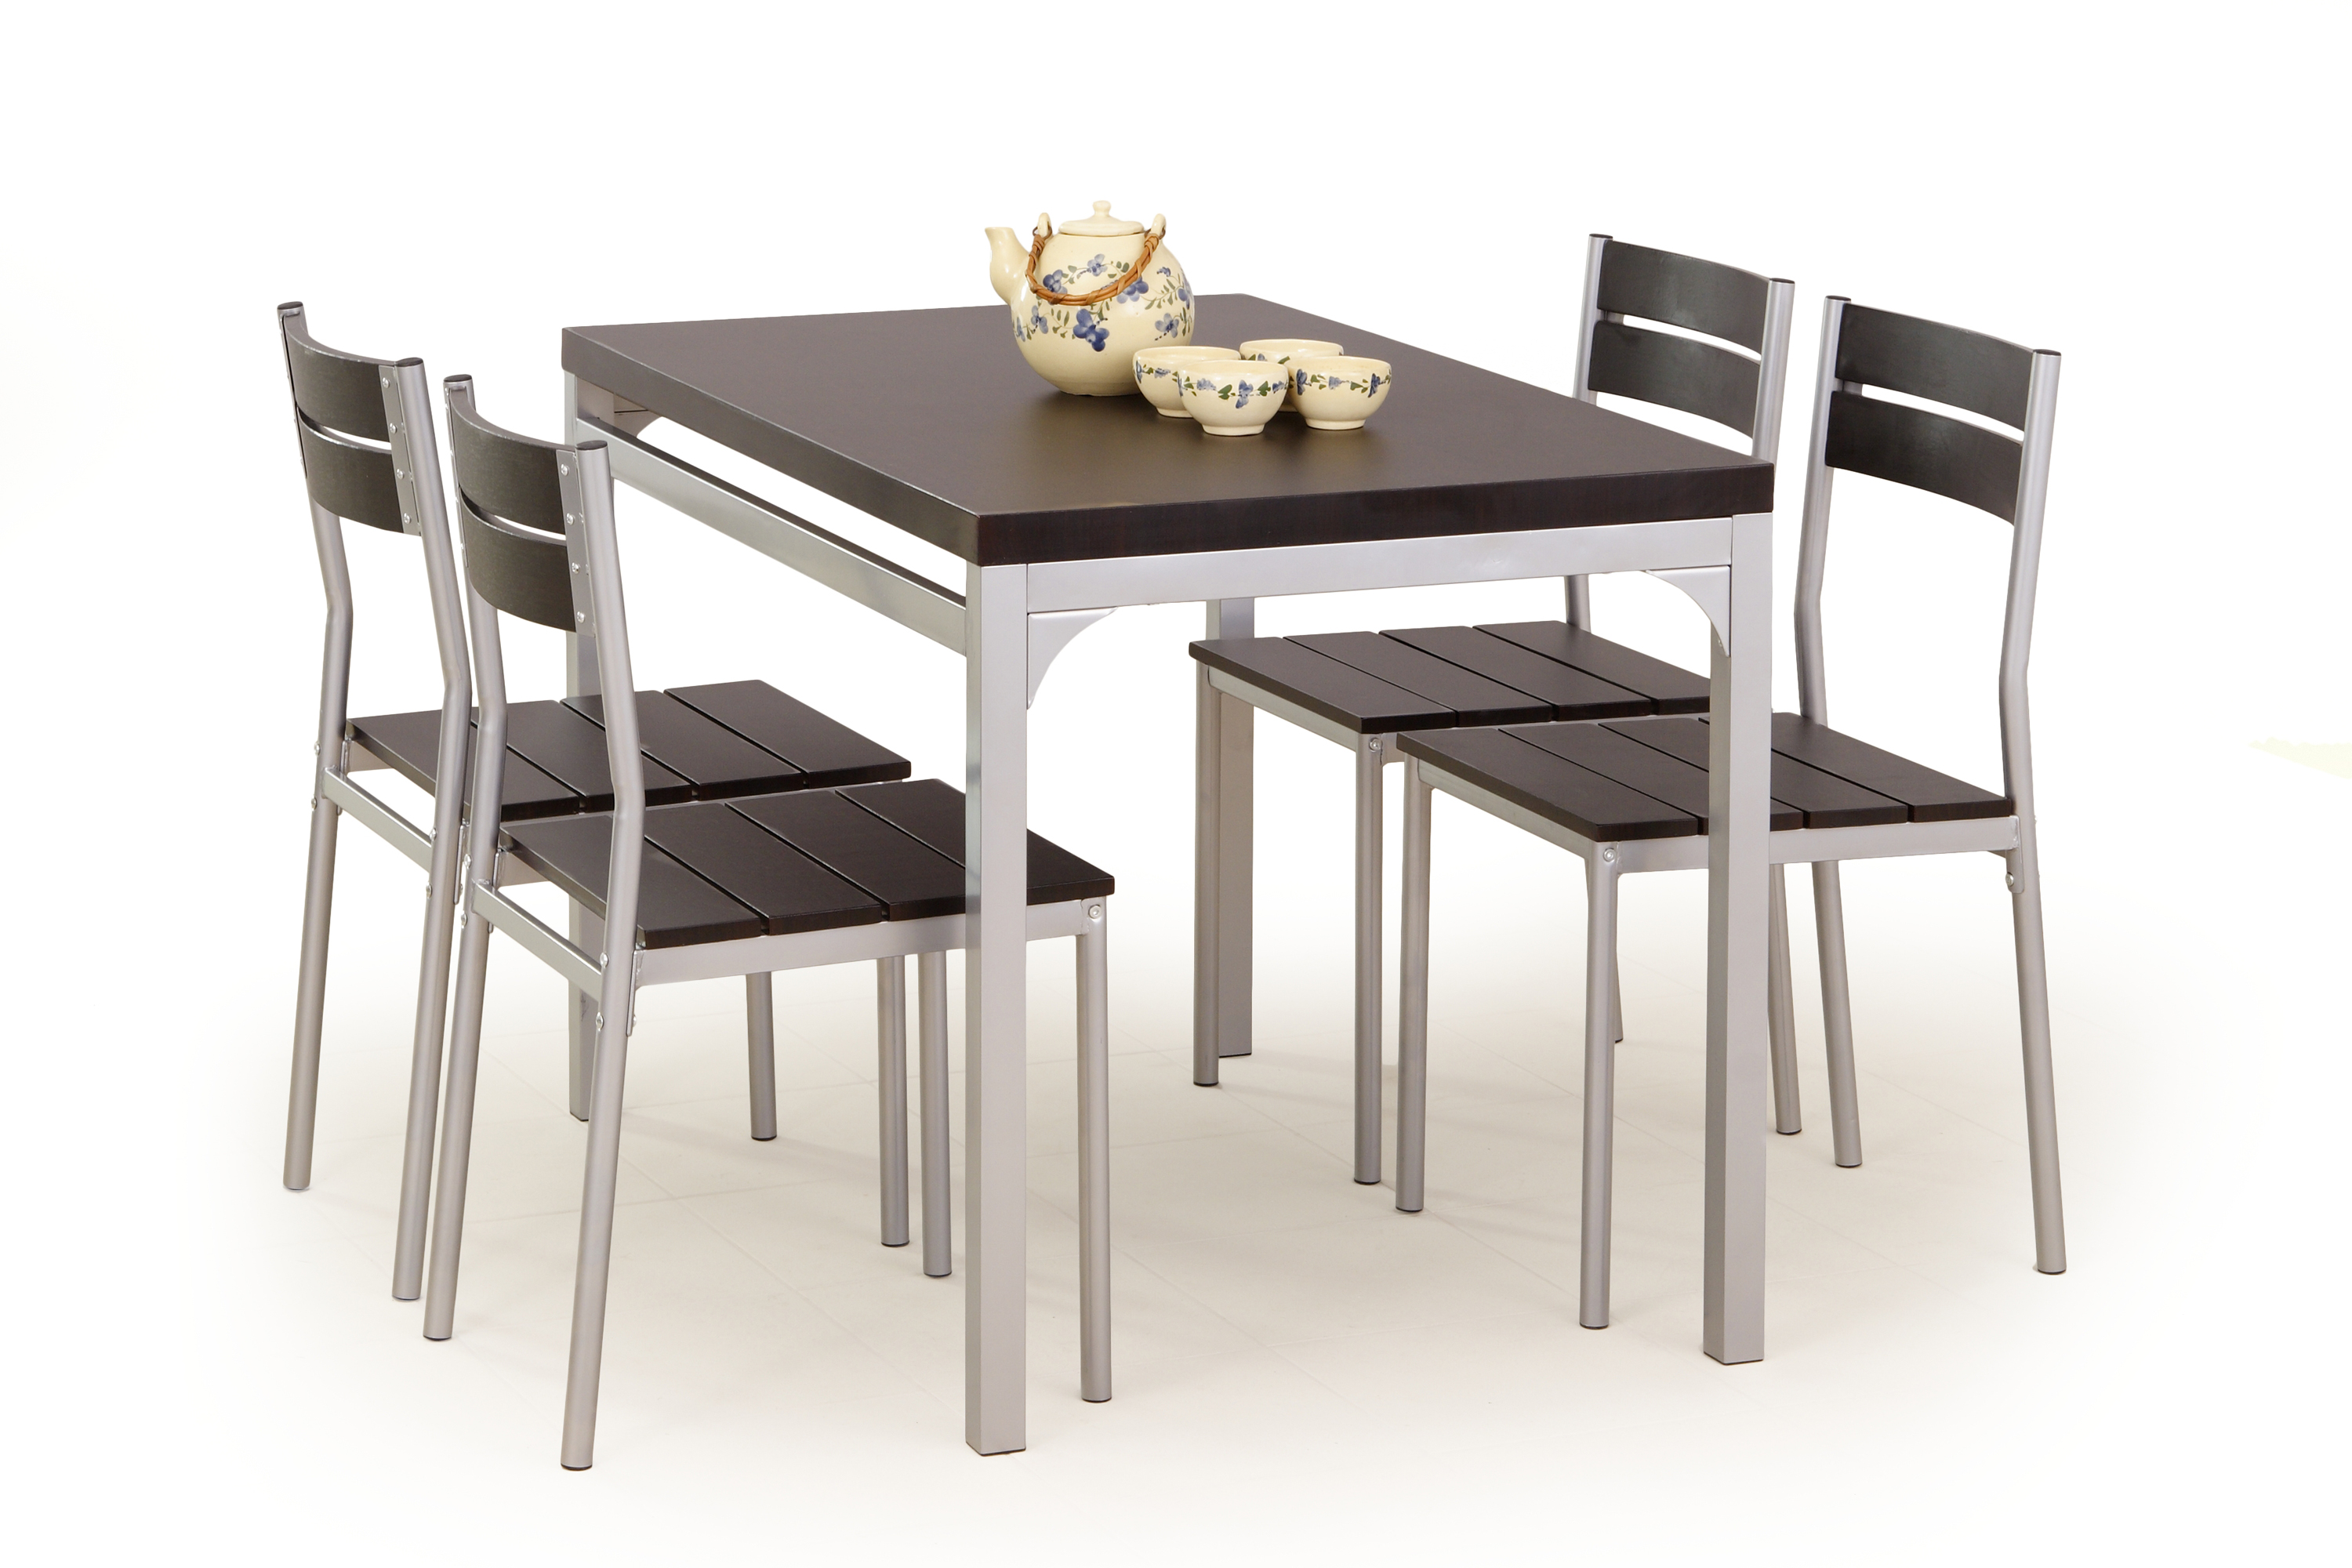 Стол кухонный набор. Обеденный набор Halmar Faust (стол + 4 стула). Столы Halmar Edward. Комплект обеденный Халмар. Обеденный комплект "стол Лион ПМ+стулья Кармен".